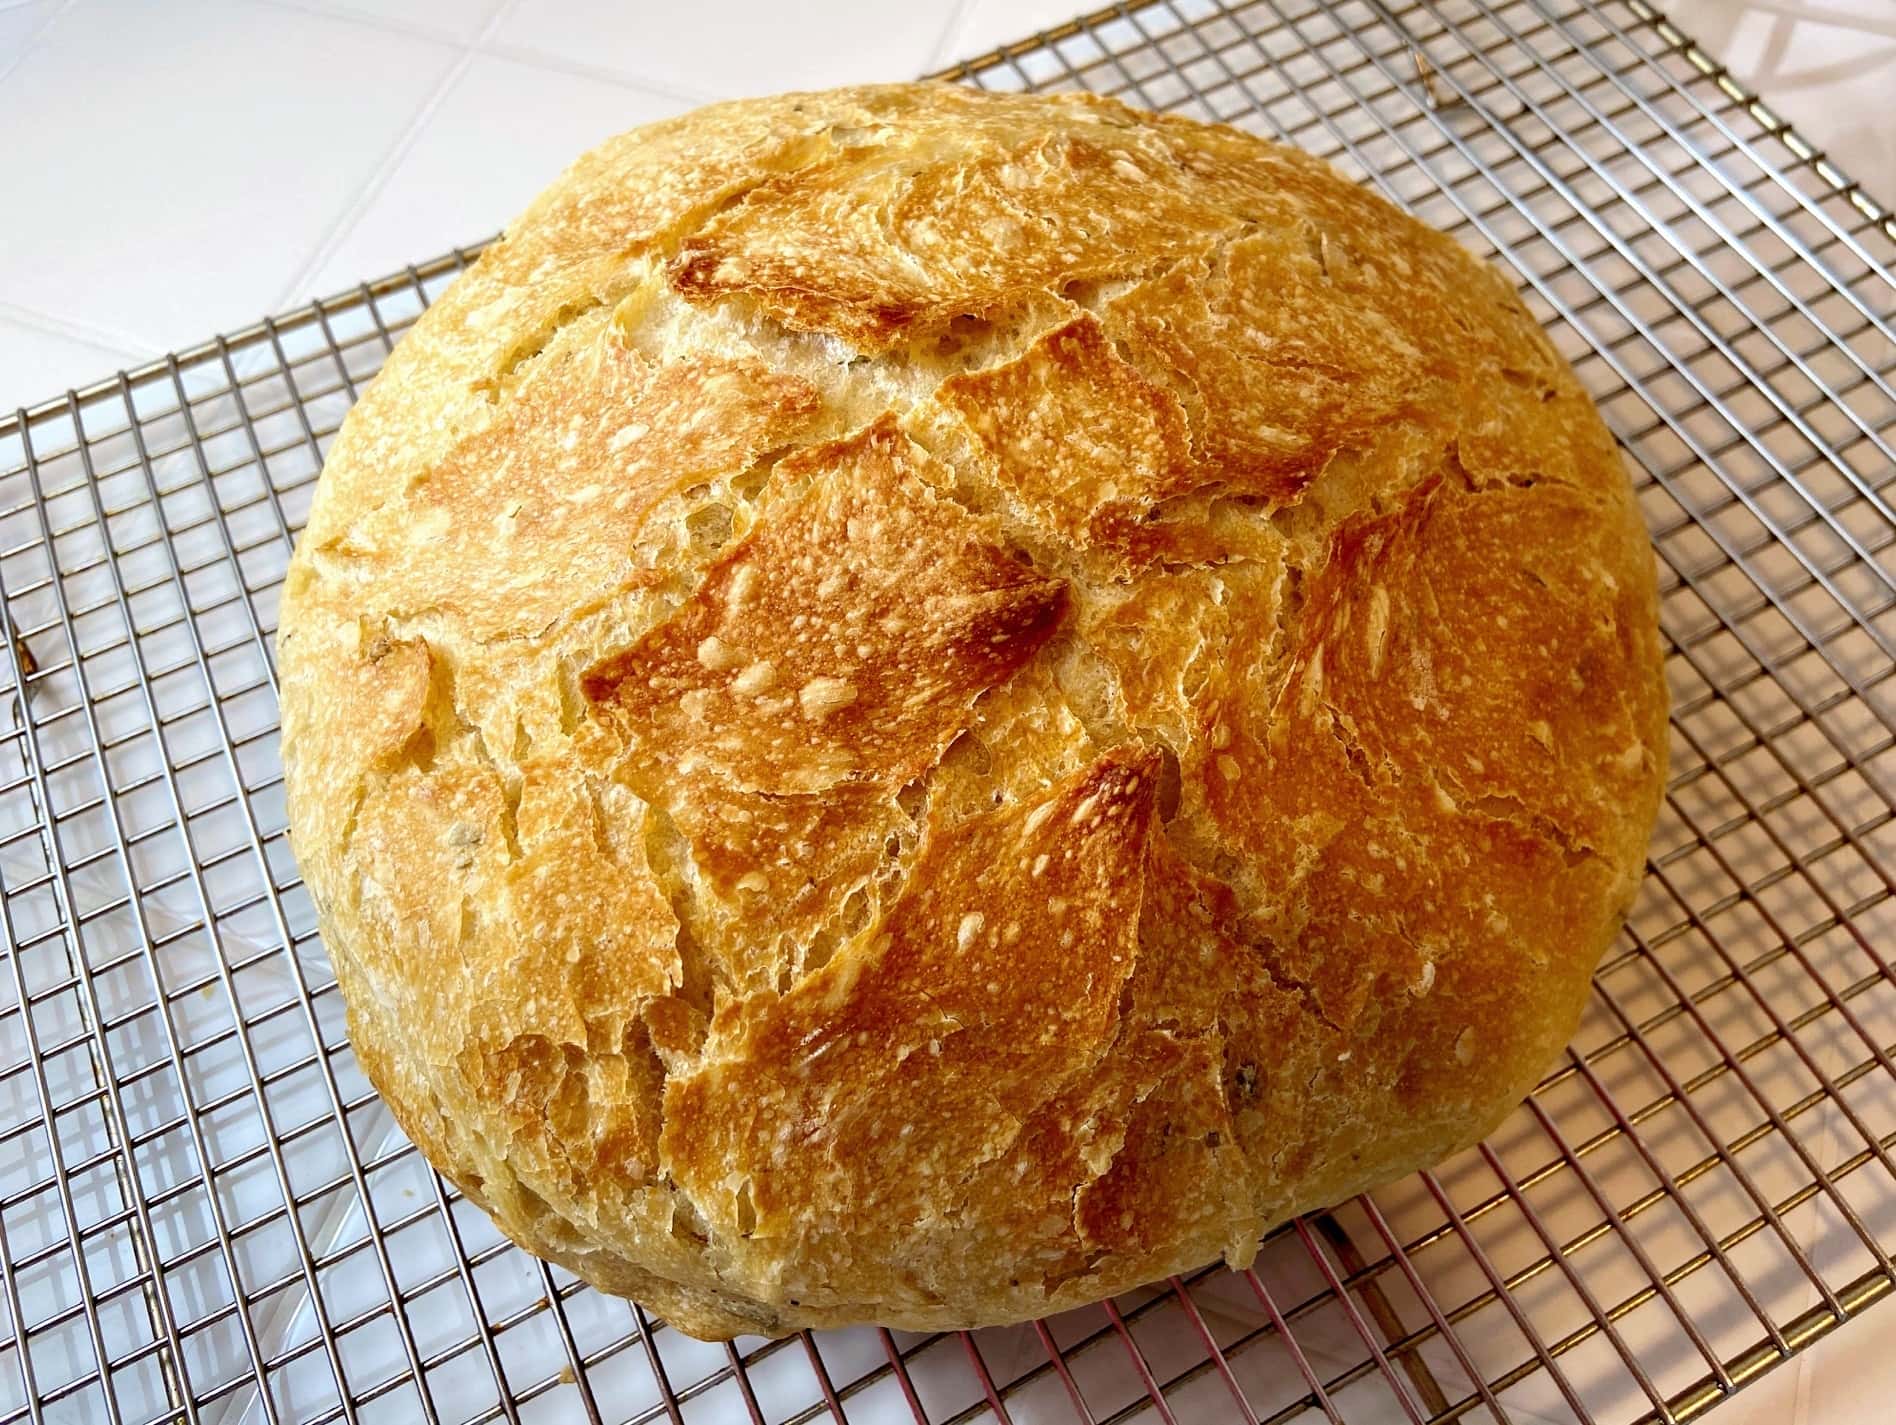 Rosemary “Very Little Knead” Bread